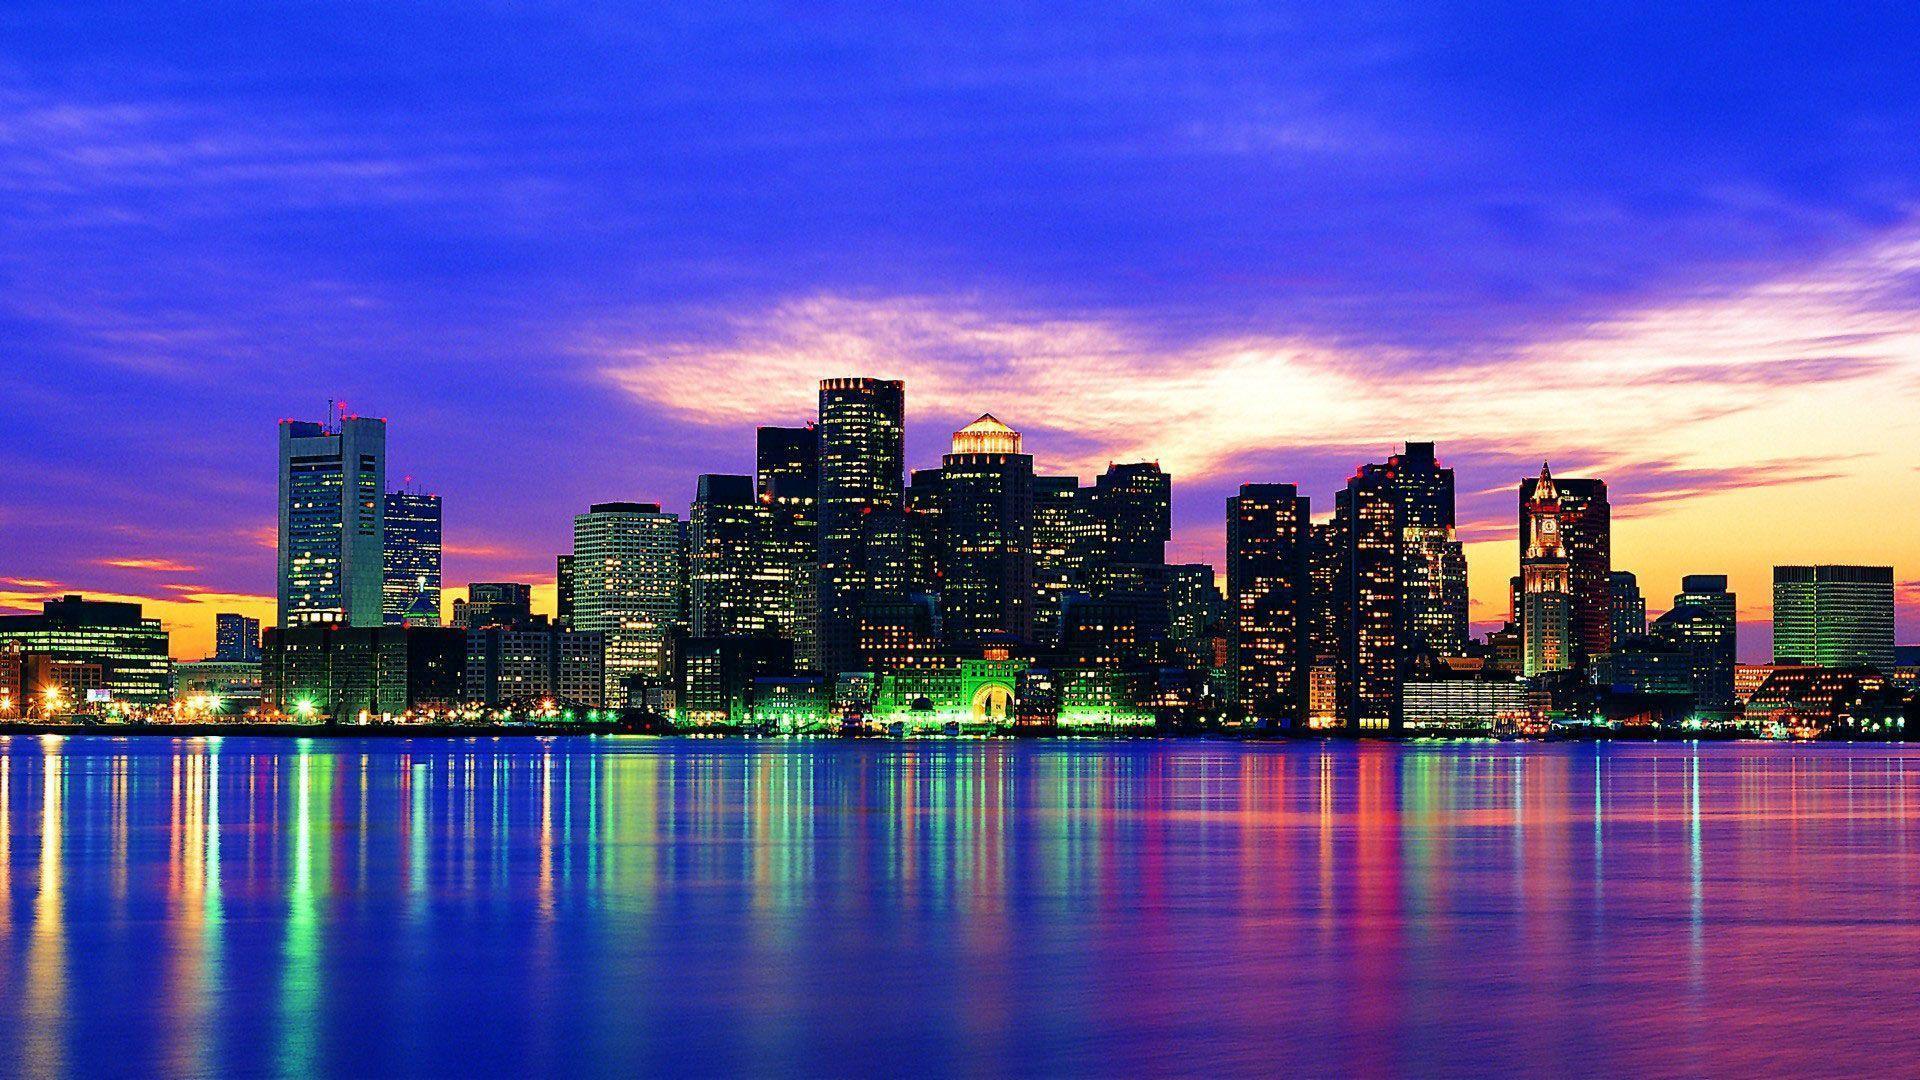 New York City Desktop Wallpaper HD